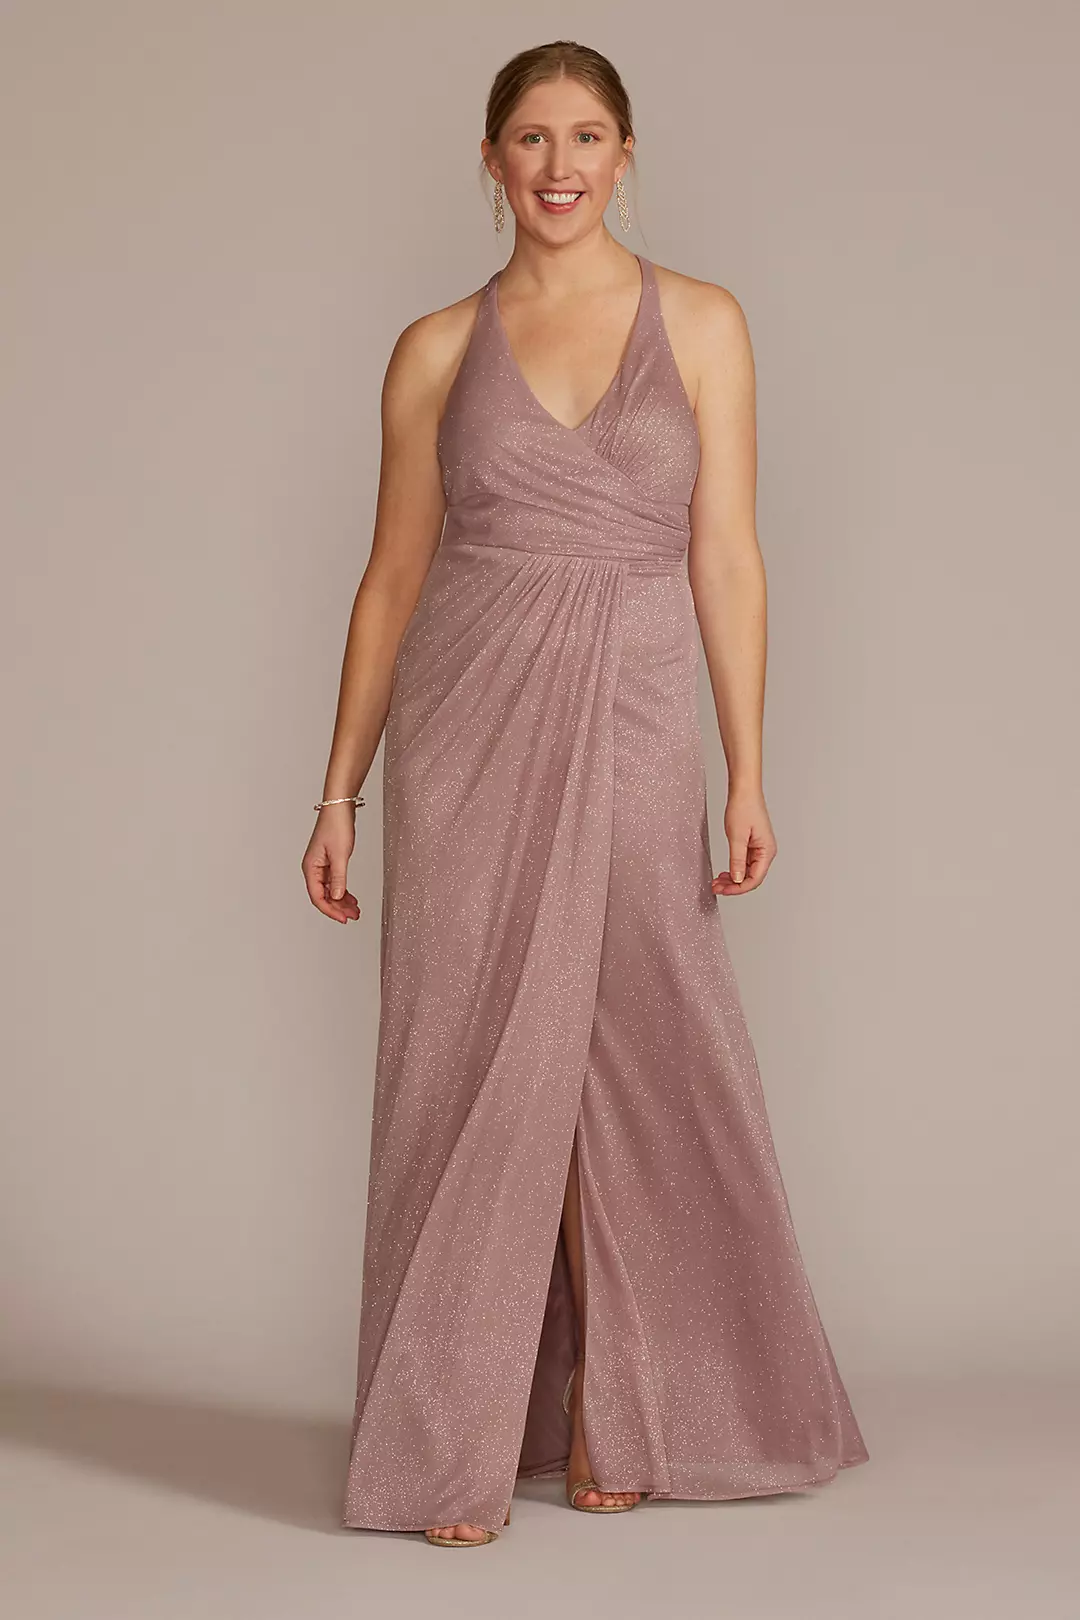 Glitter Knit Wrap Tank Dress with Skirt Slit Image